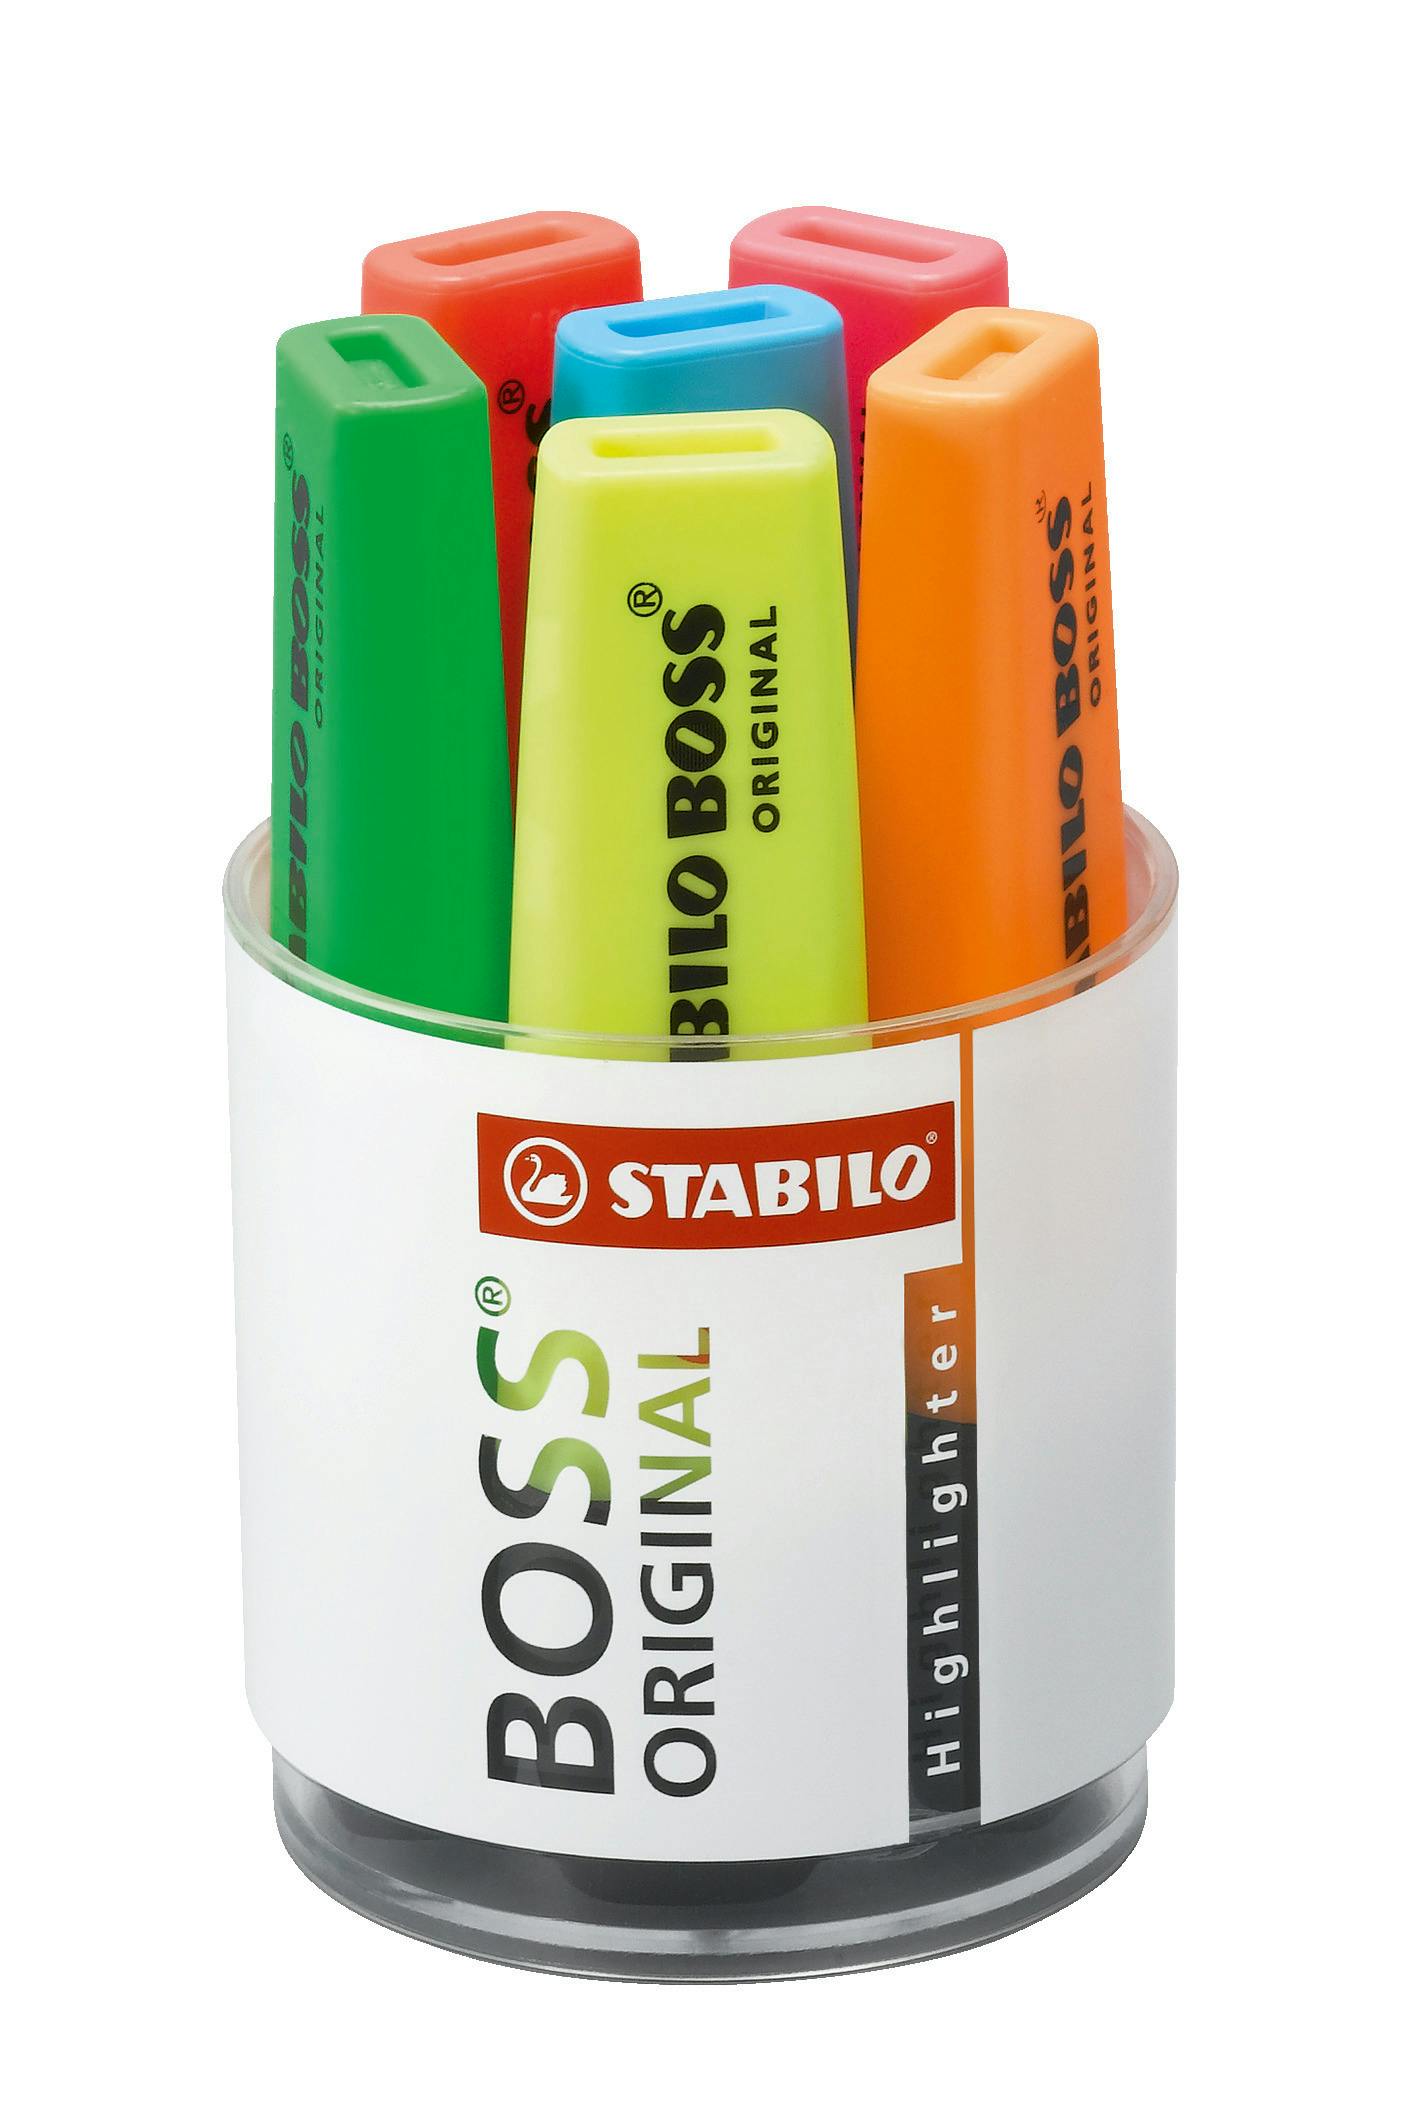  SURLIGNEUR - STABILO Green BOSS - 1 SURLIGNEUR Rechargeable -  Jaune : Office Products